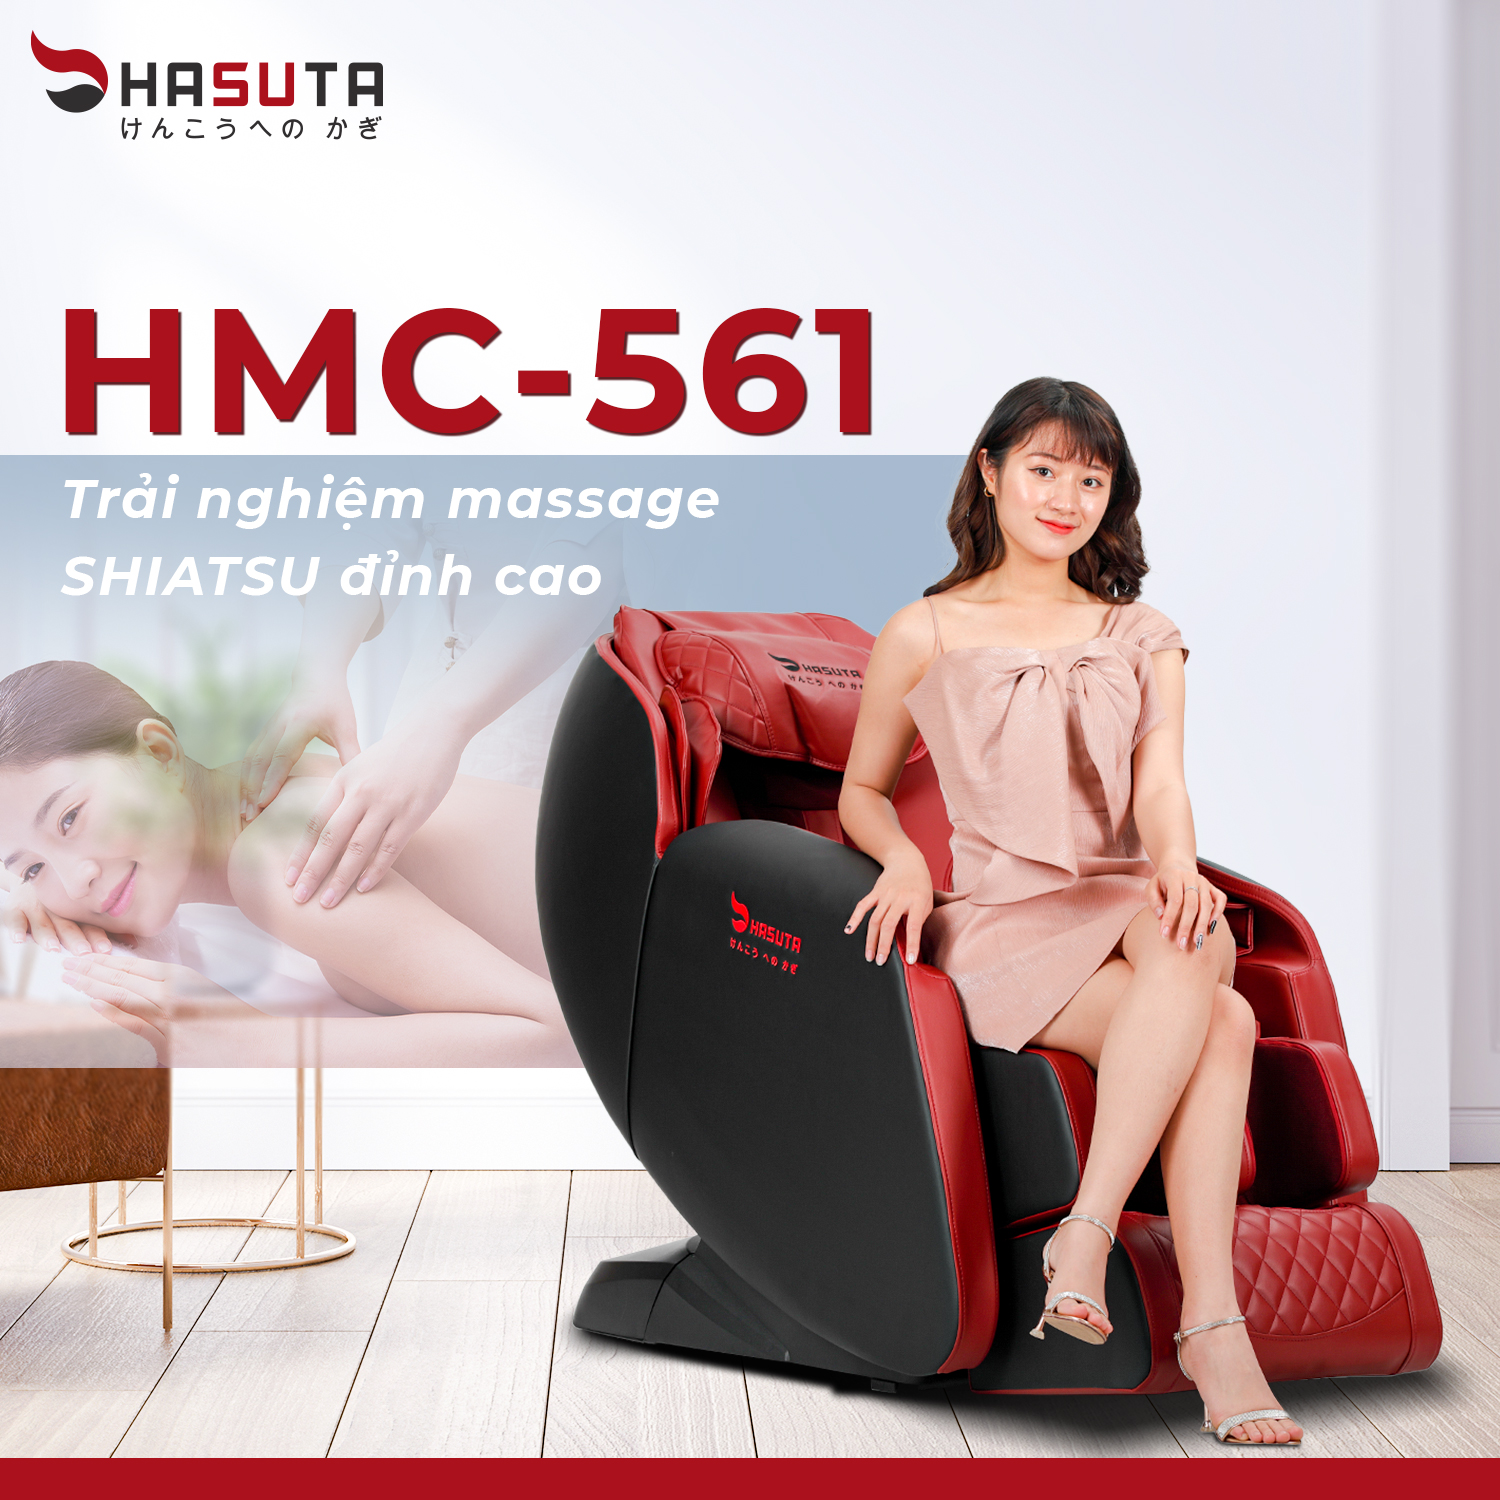 ghe massage hmc 561